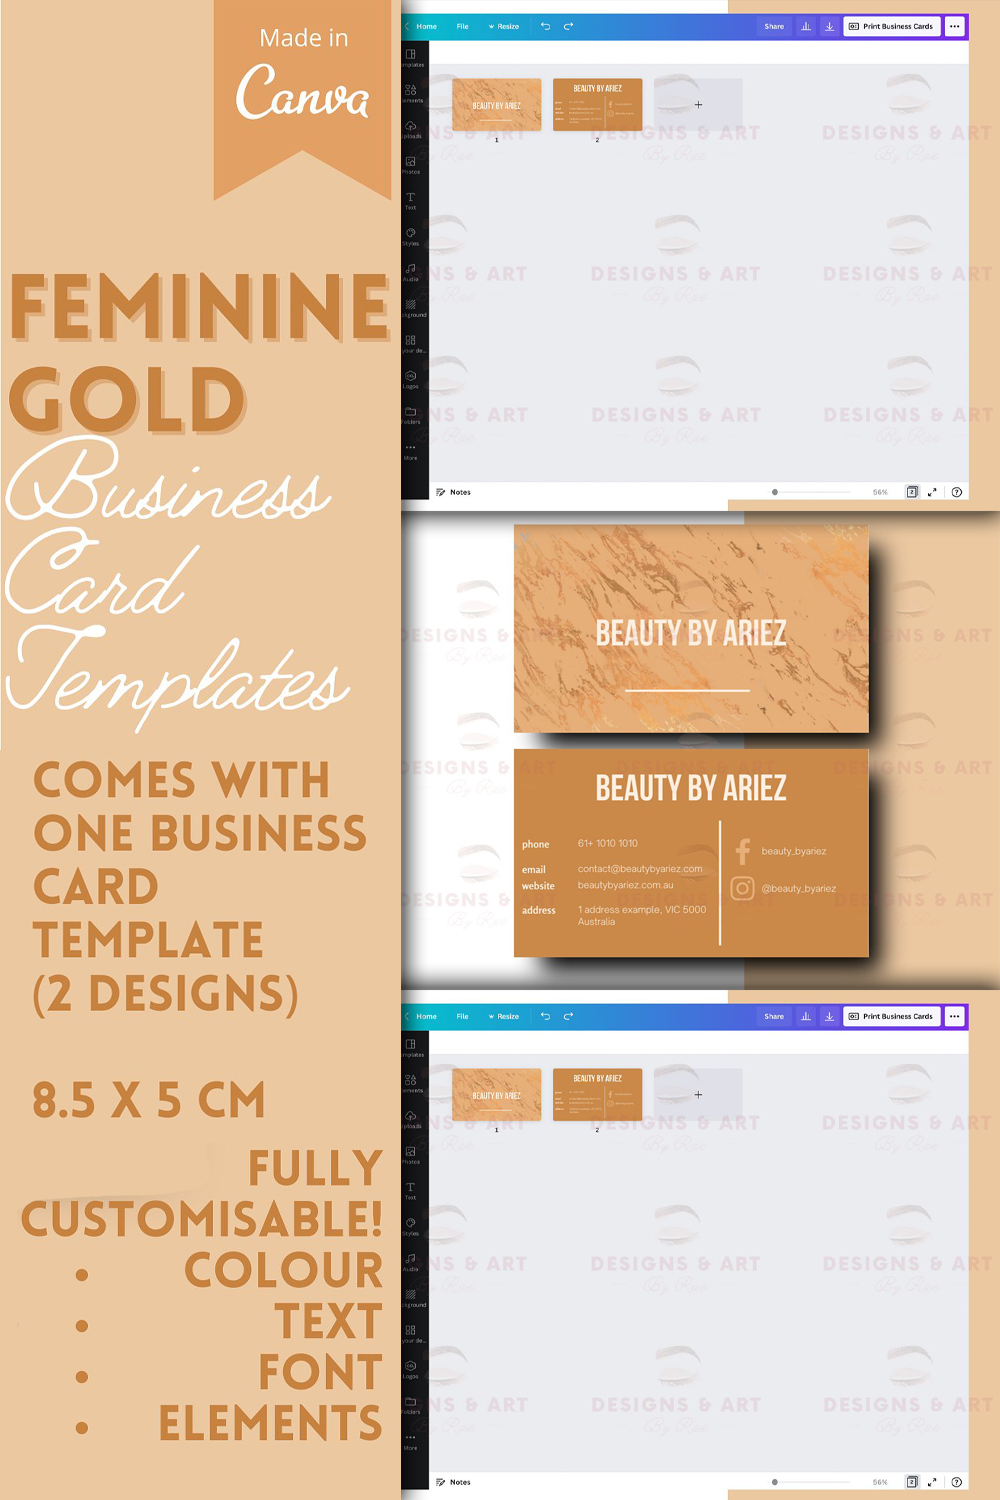 Gold business card templates of pinterest.